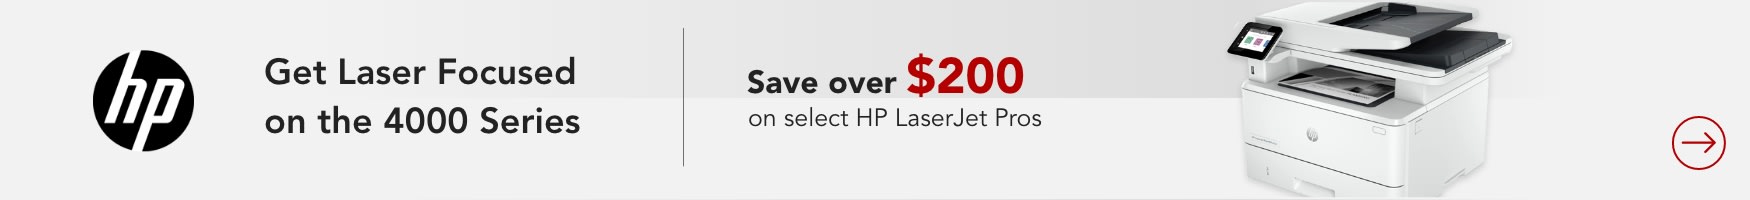 Save over $200 on select HP LaserJet Pros